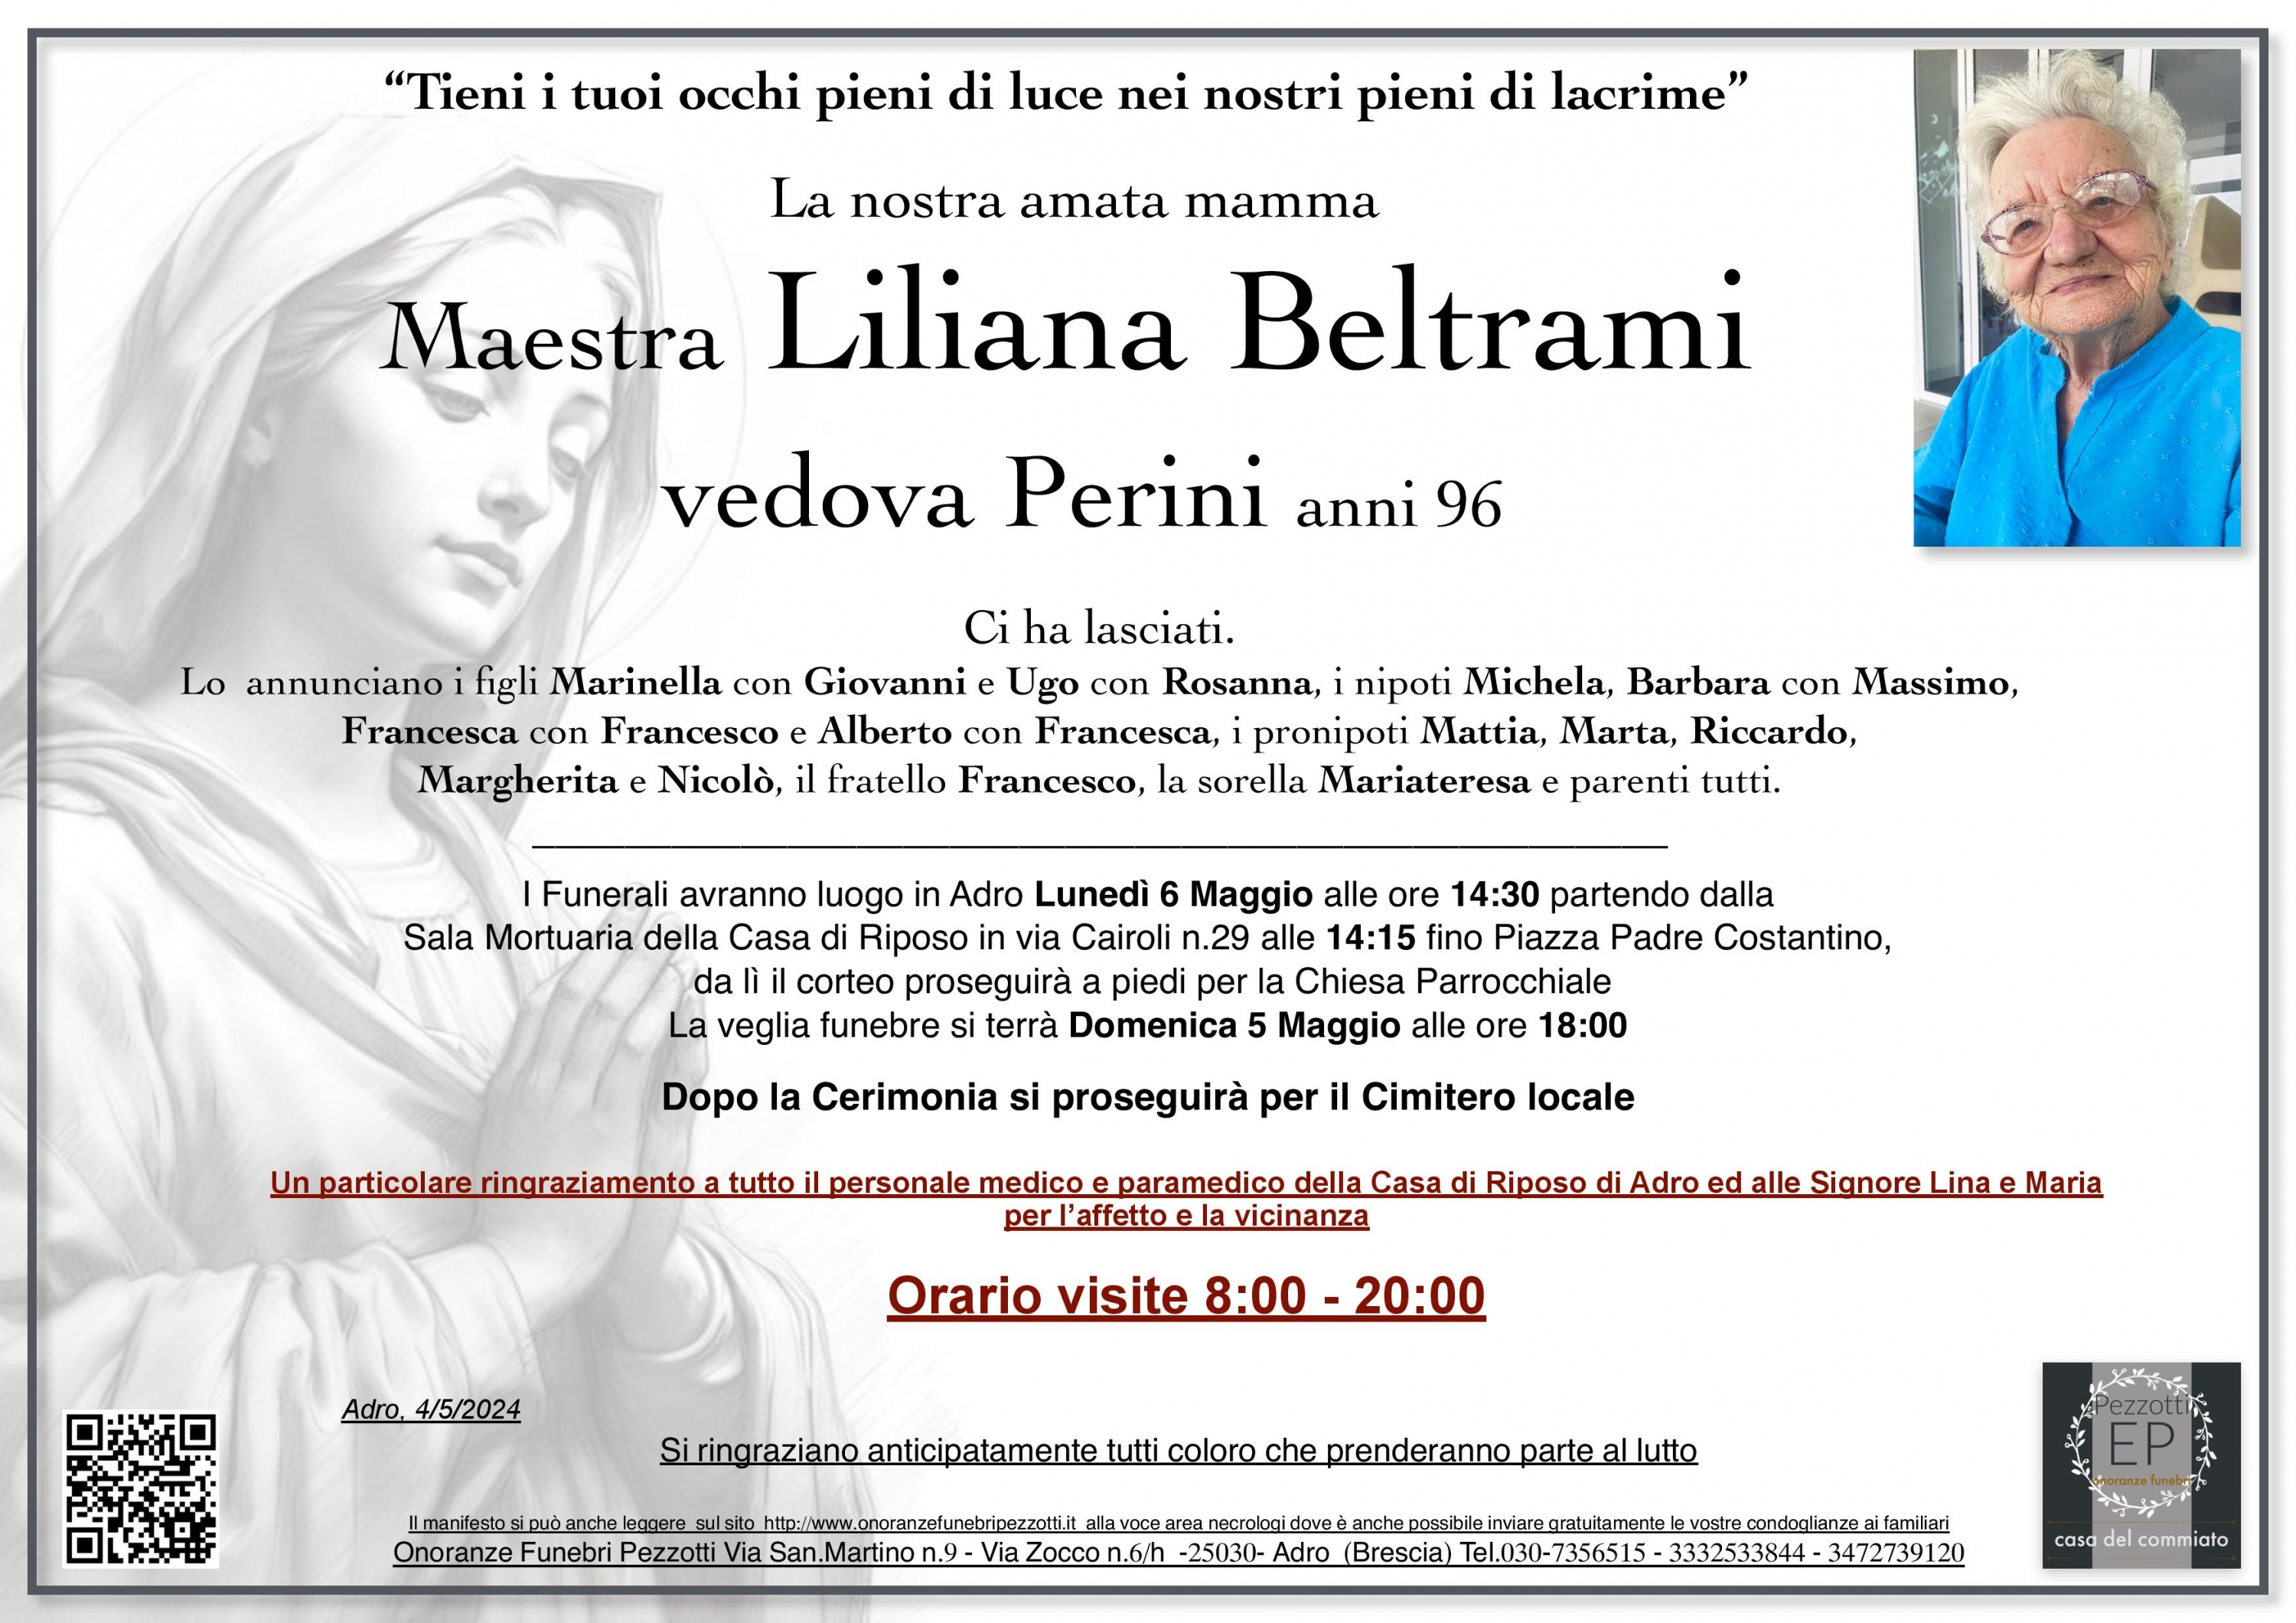 Liliana Beltrami Ved. Perini